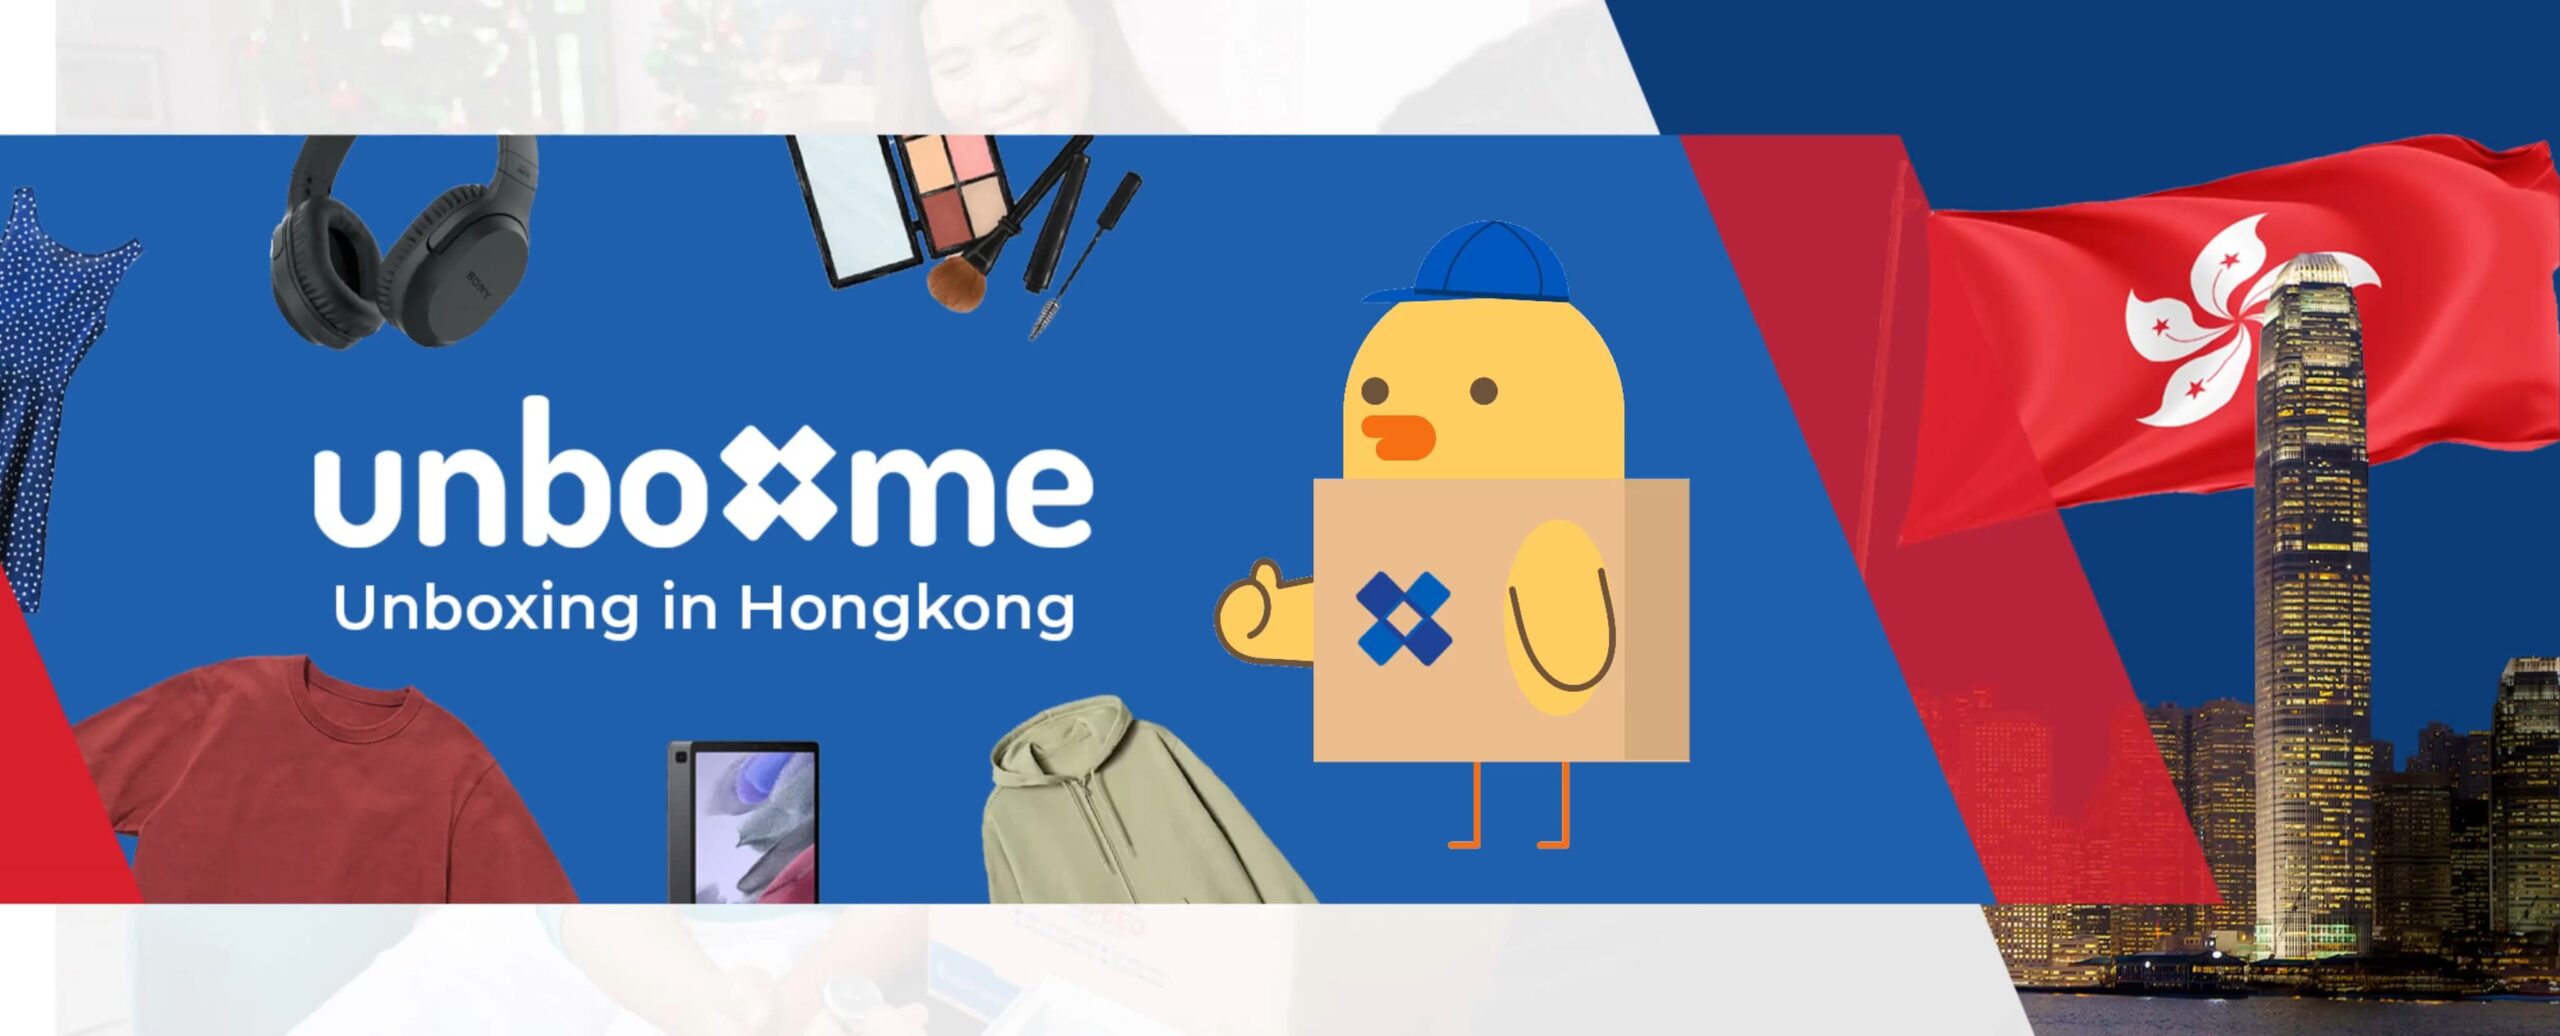 Unboxme_Web Banner-Gifty Hongkong